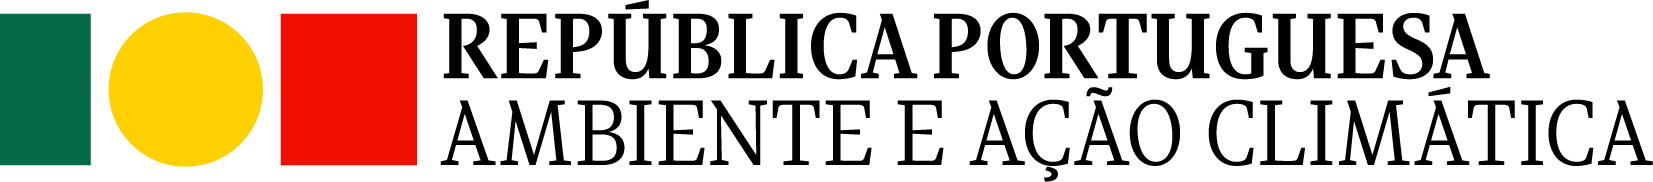 republica_portuguesa_logo